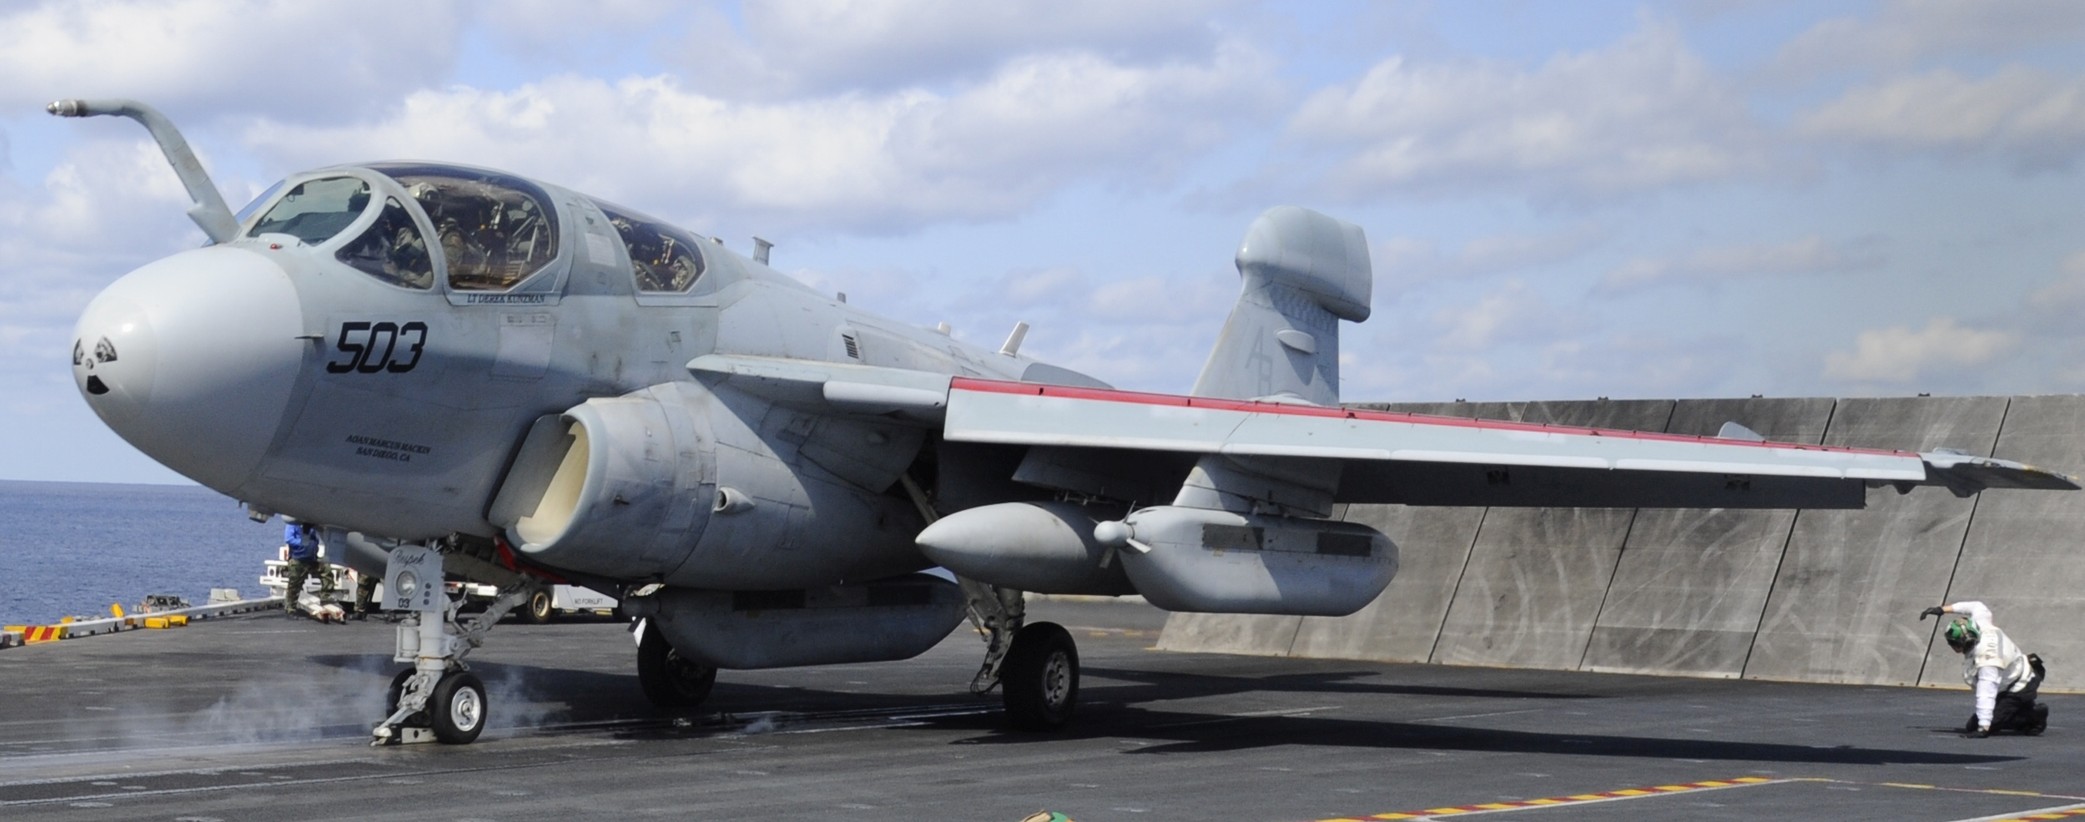 vaq-137 rooks electronic attack squadron us navy ea-6b prowler carrier air wing cvw-1 uss enterprise cvn-65 33